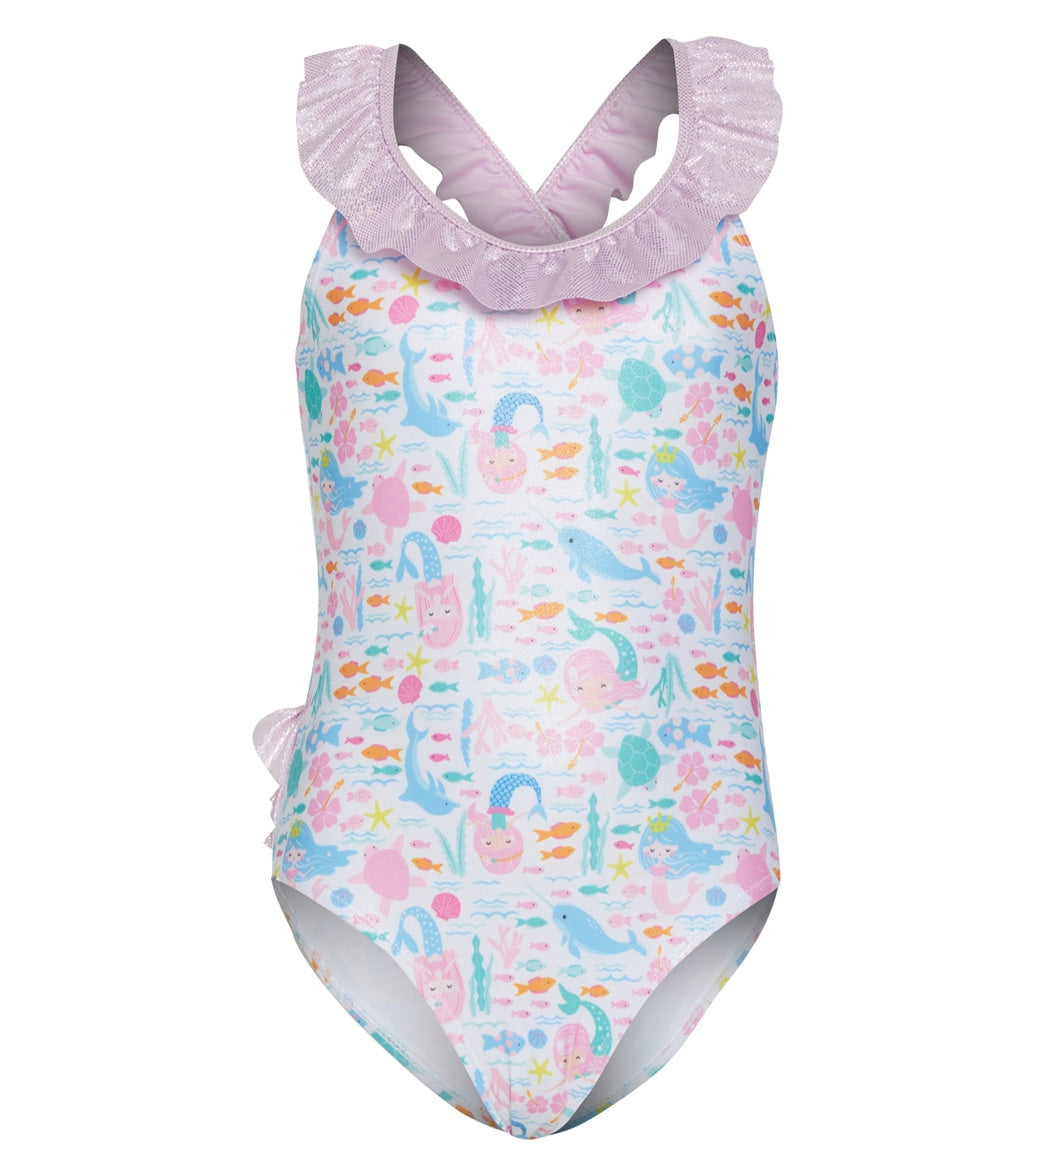 Flap Happy Girls Fantasea Mermaids Mindy UPF 50+ One Piece Swimsuit (Baby, Toddler, Little Kid)